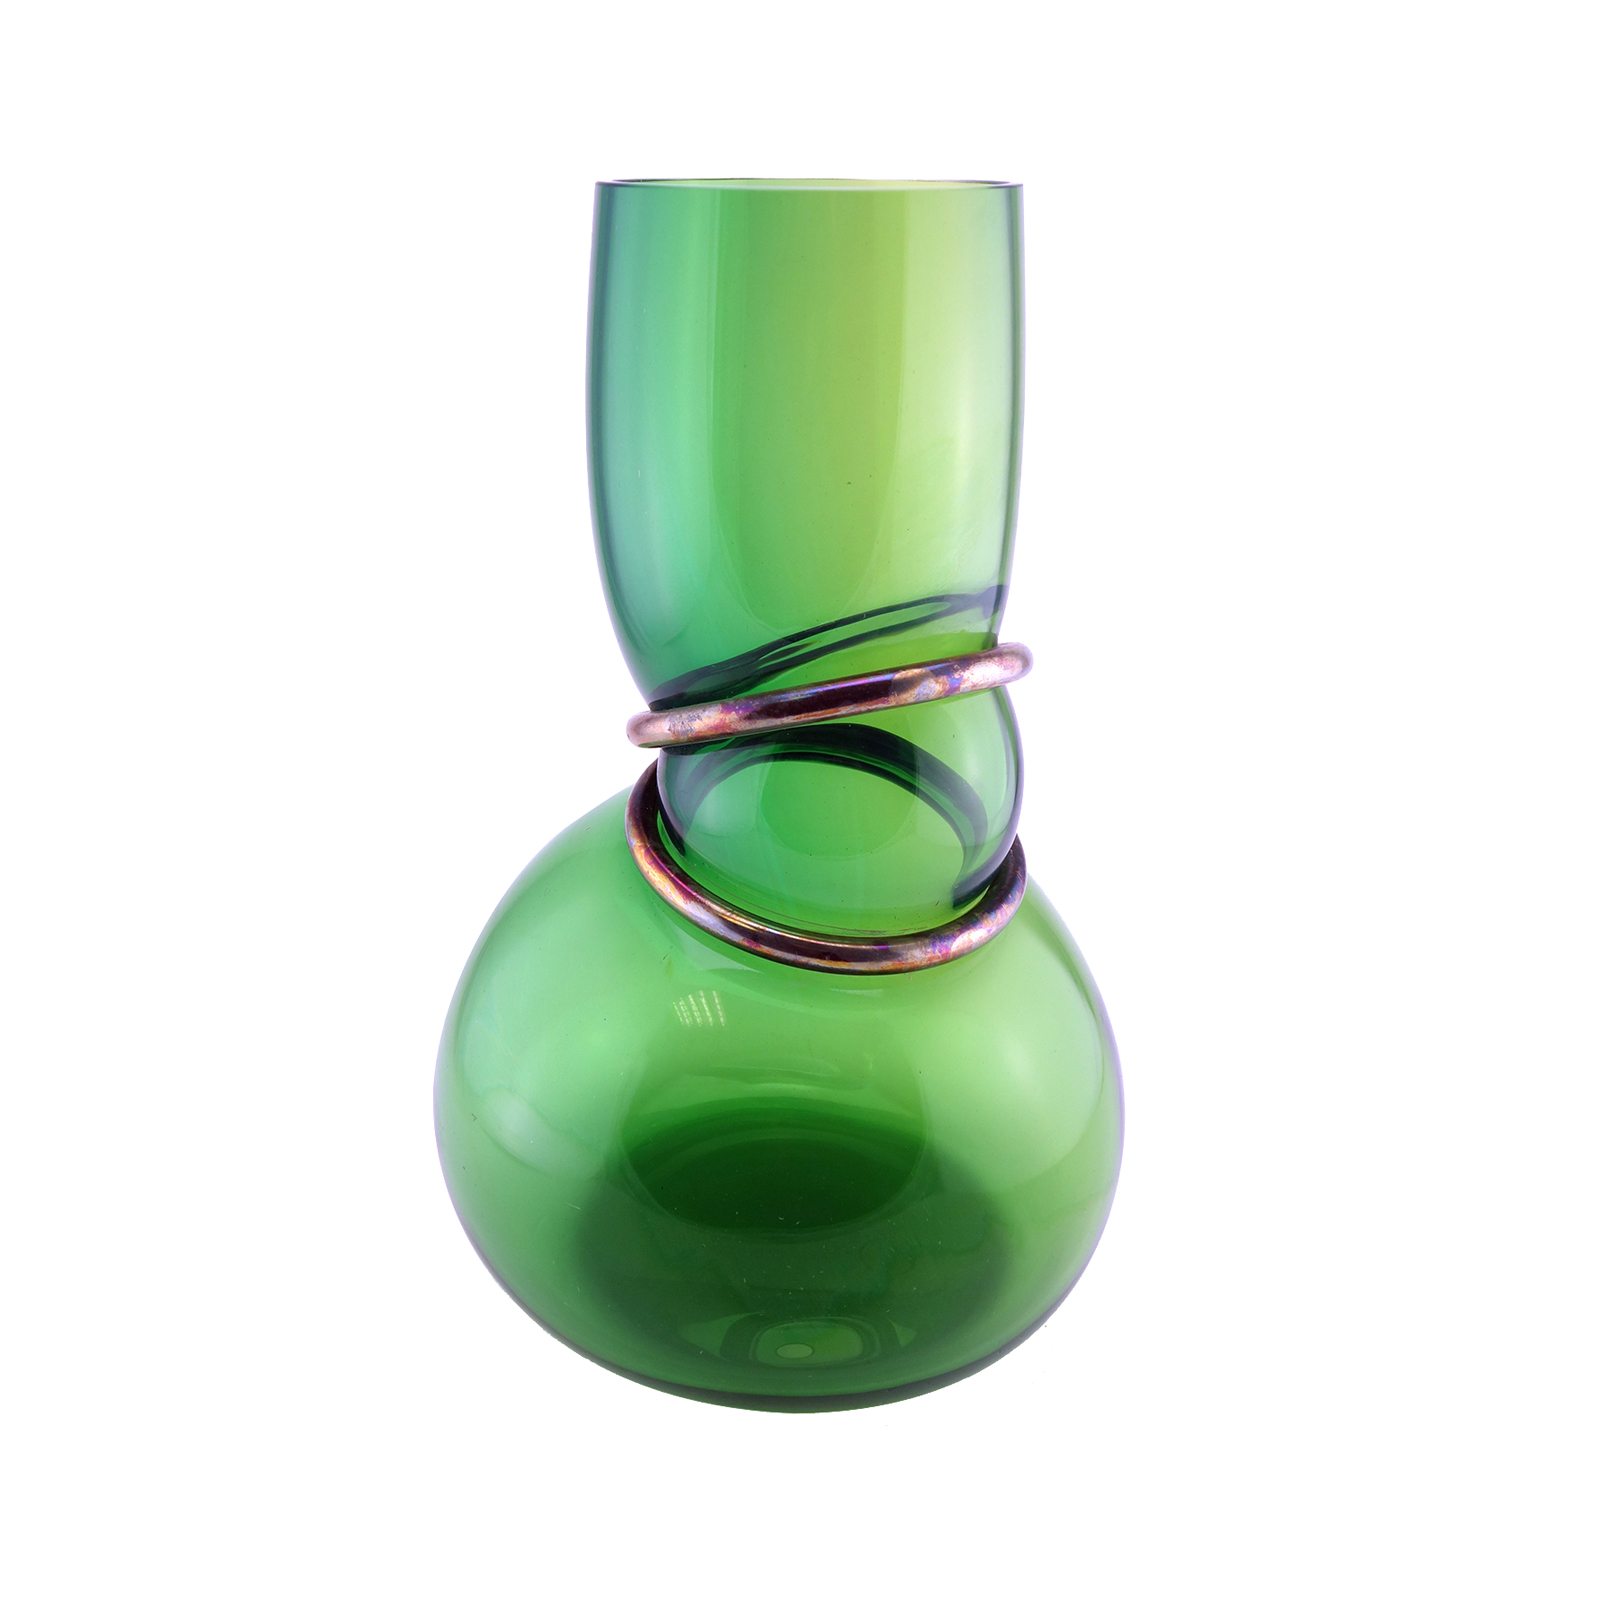 https://delisart.com/wp-content/uploads/2020/03/DOUBLE-RING-Vase-Green-Design-Vanessa-Mitrani_w.jpg